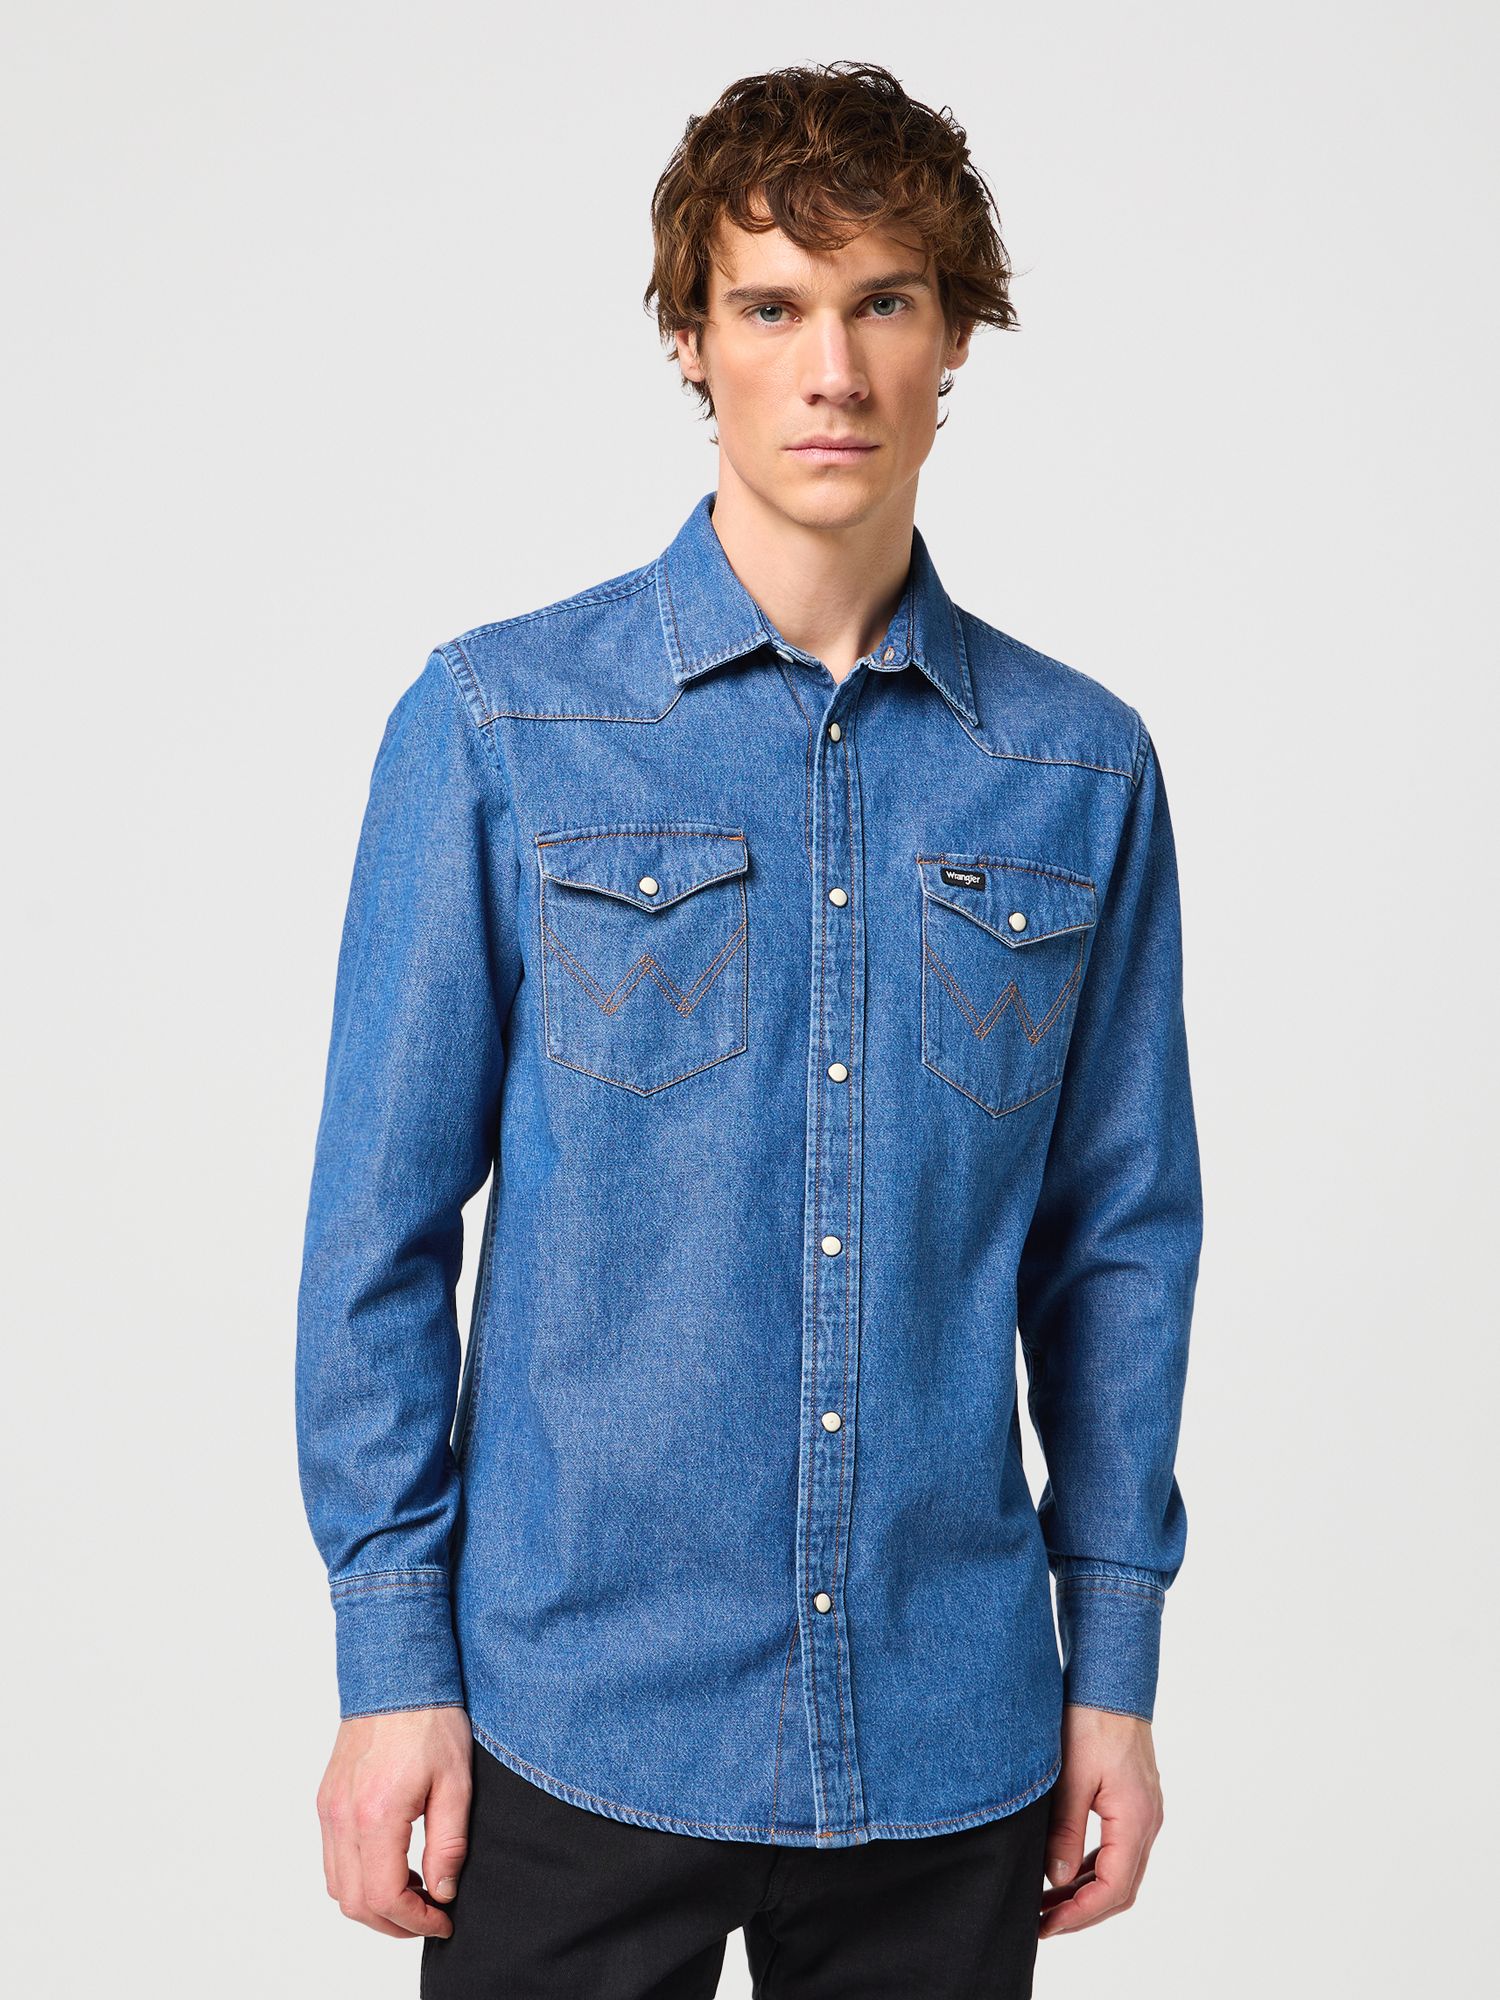 Wrangler Denim Long Sleeve Western Shirt, Blue, XL